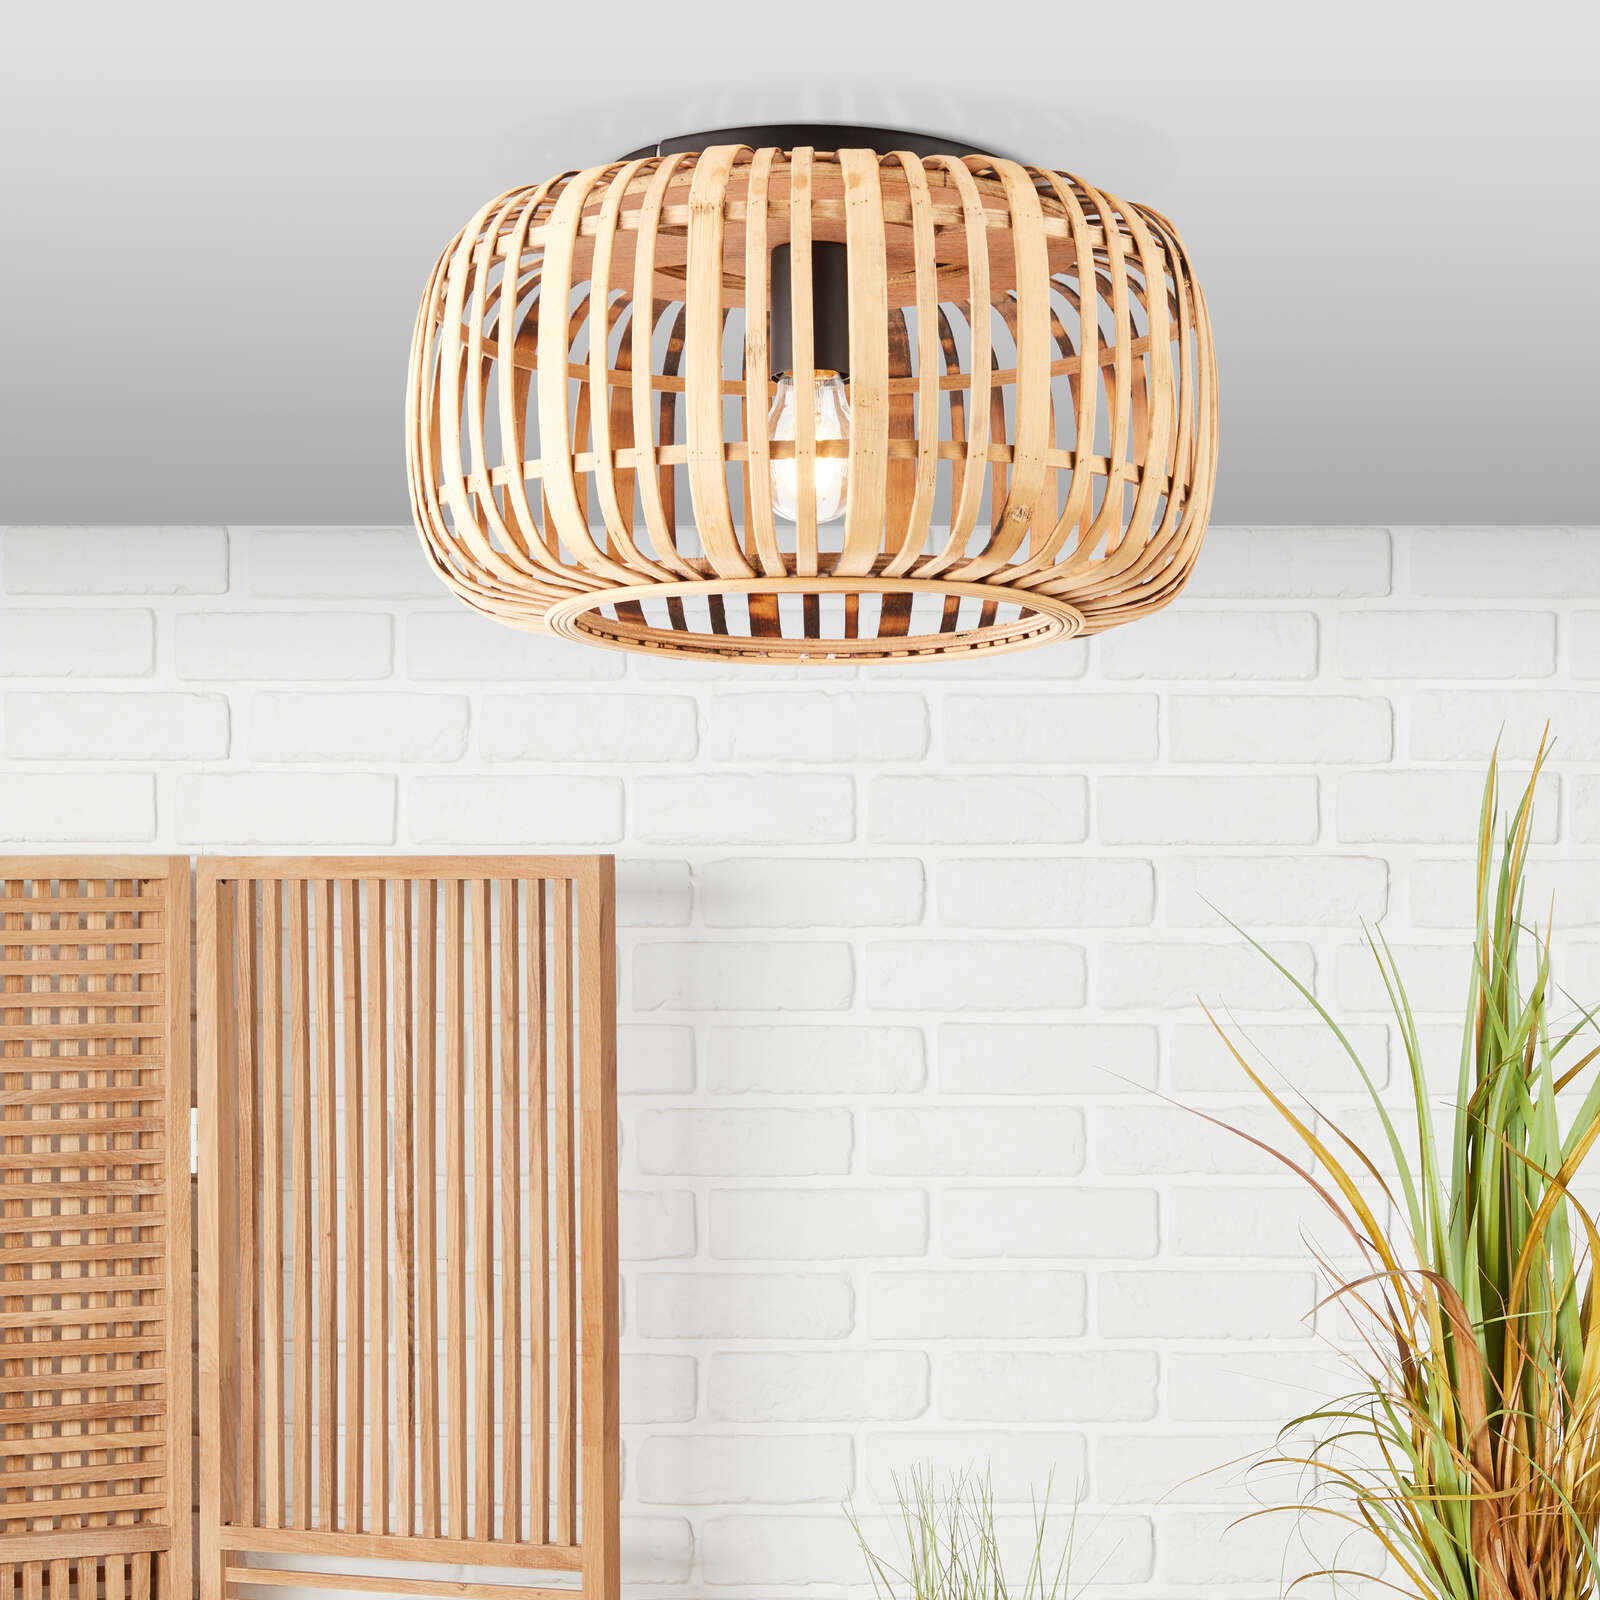             Bamboe plafondlamp - Willi 6 - Bruin
        